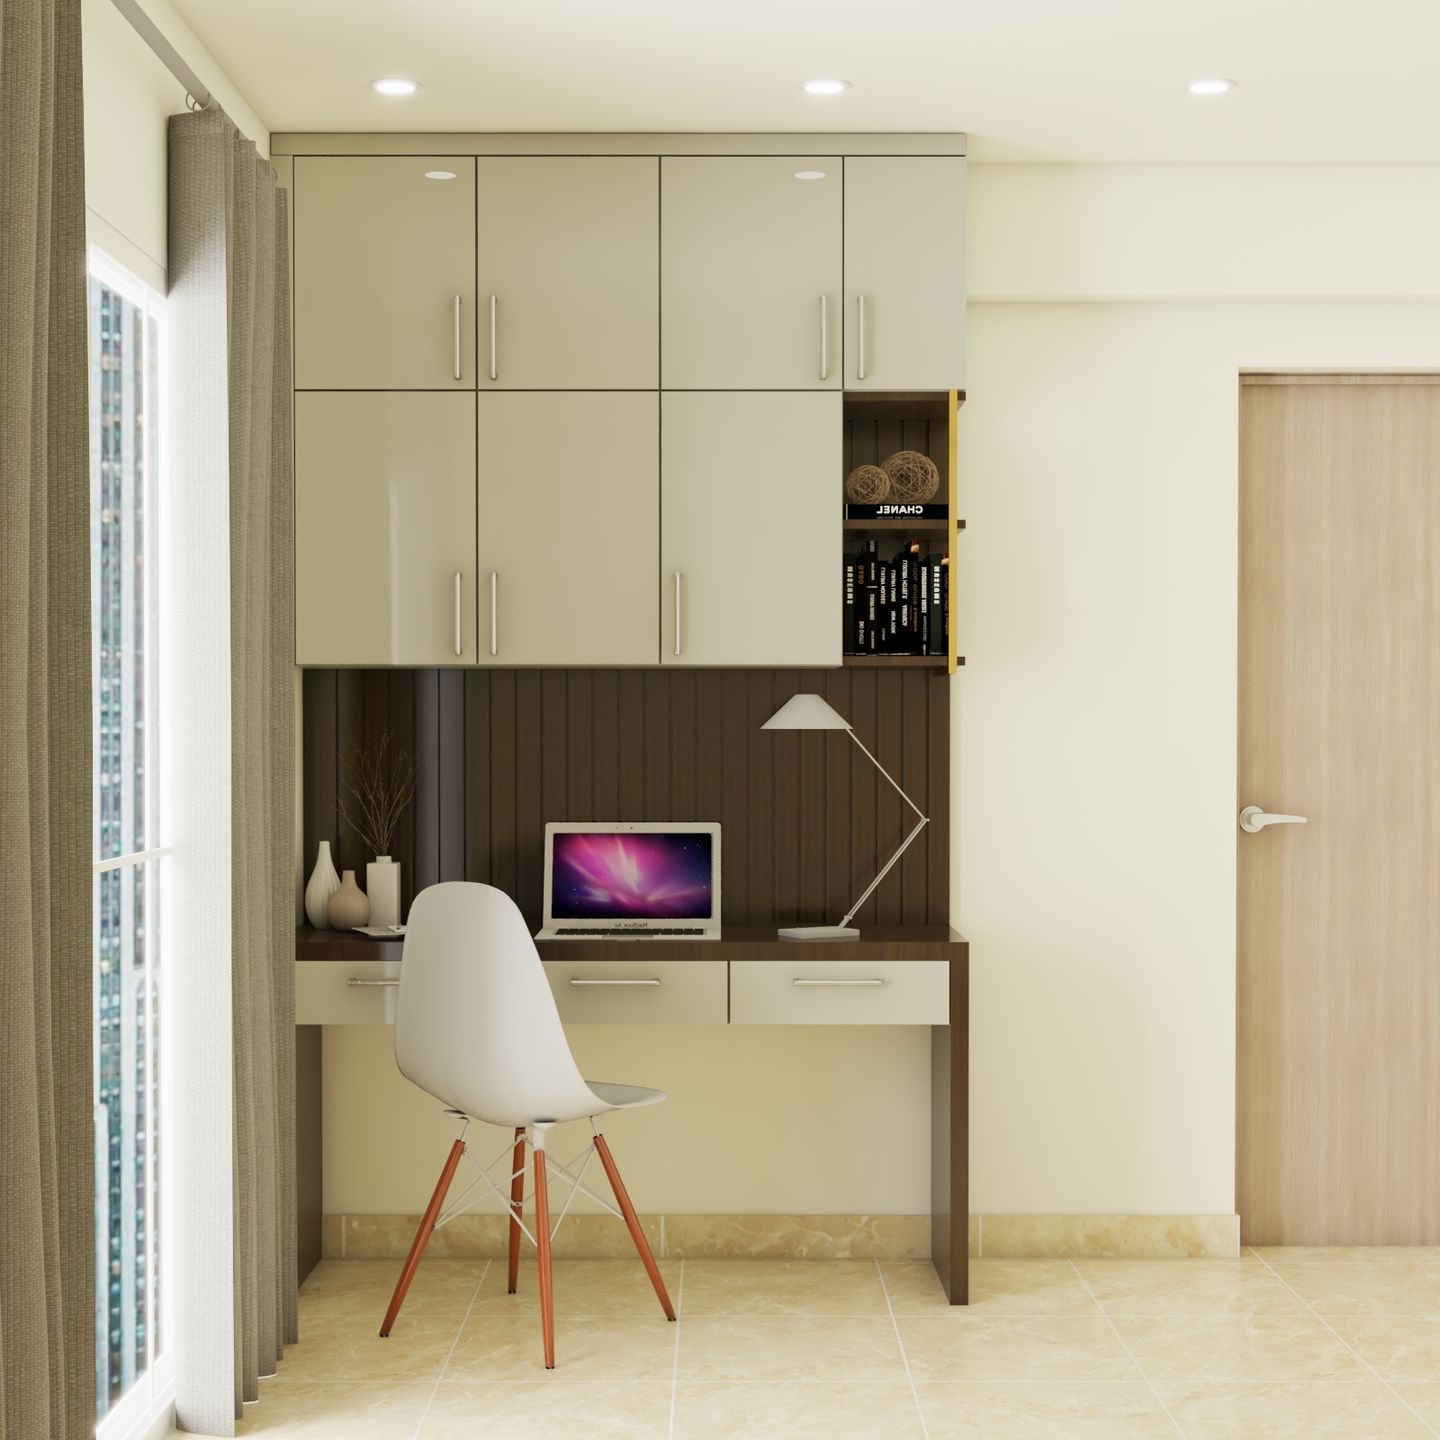 Compact Study Room Interior Design - Livspace